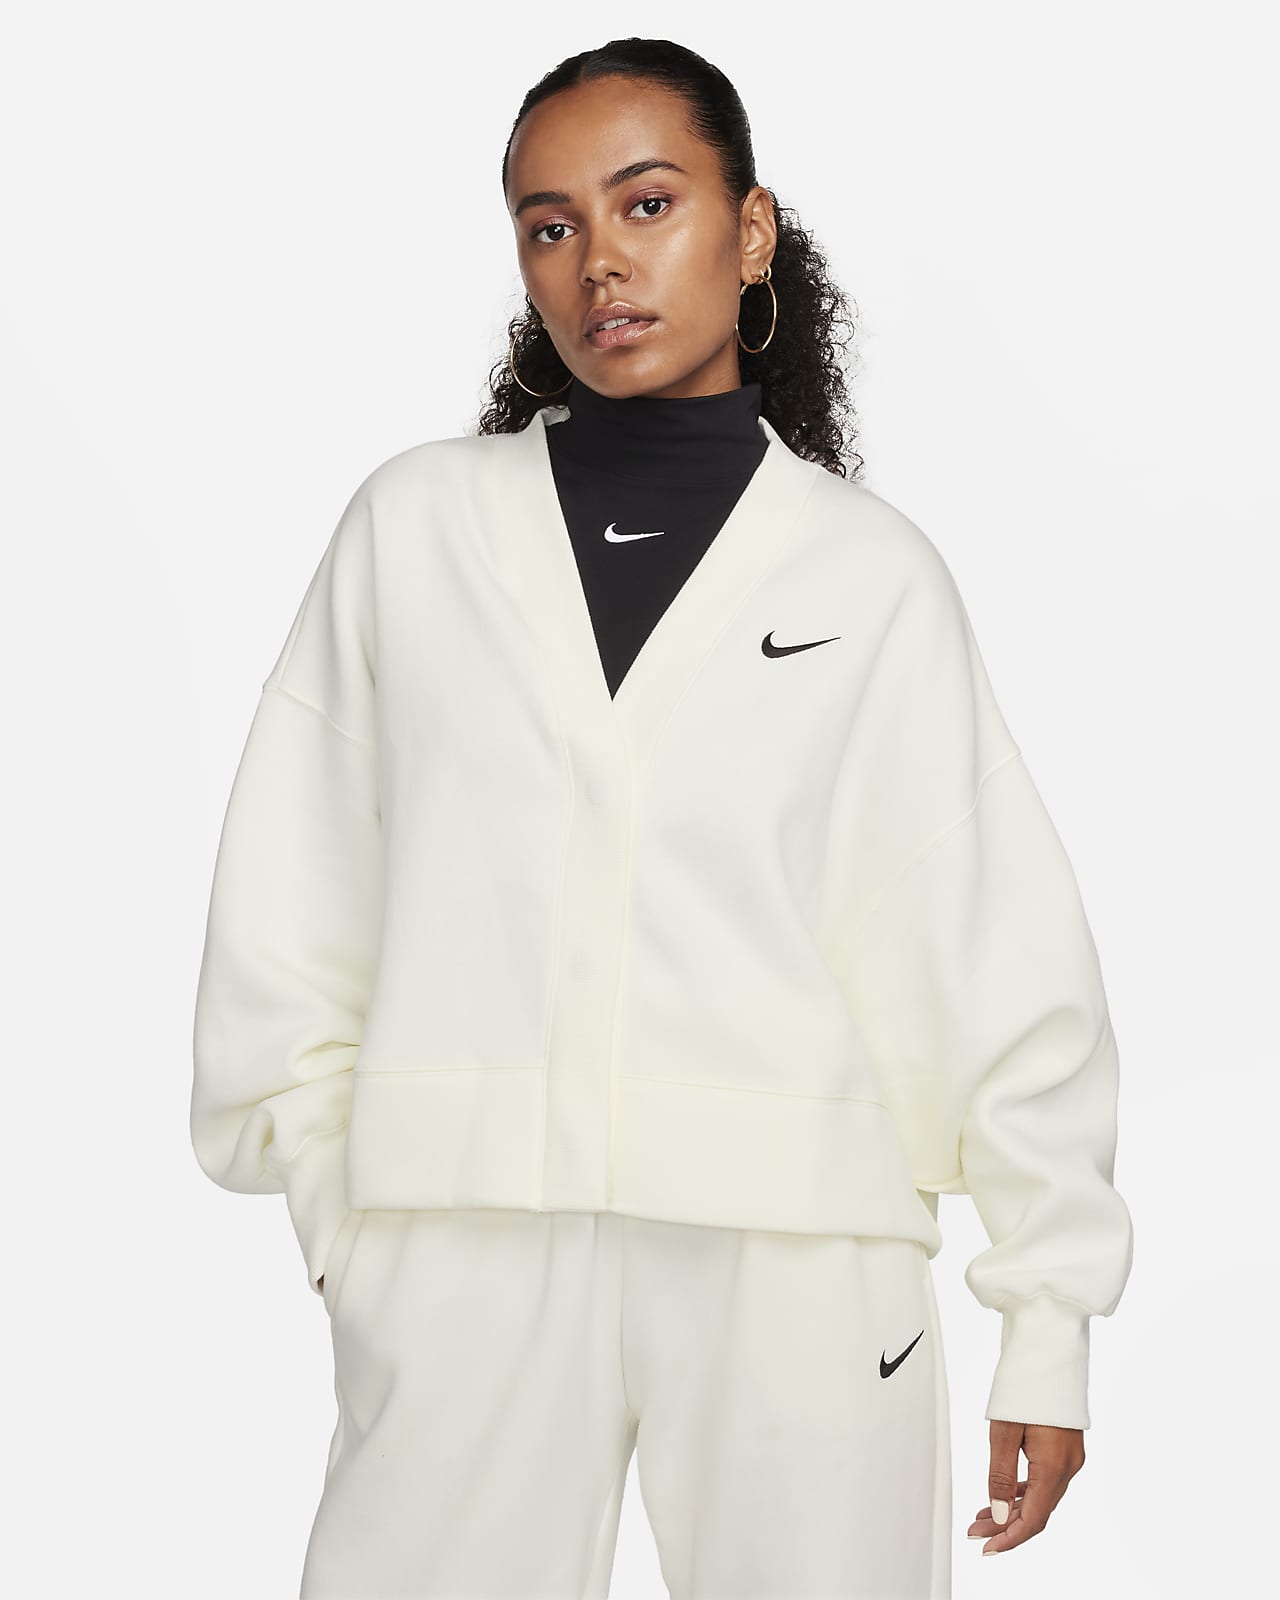 Cardigan extraoversized para mujer Nike Sportswear Phoenix Fleece